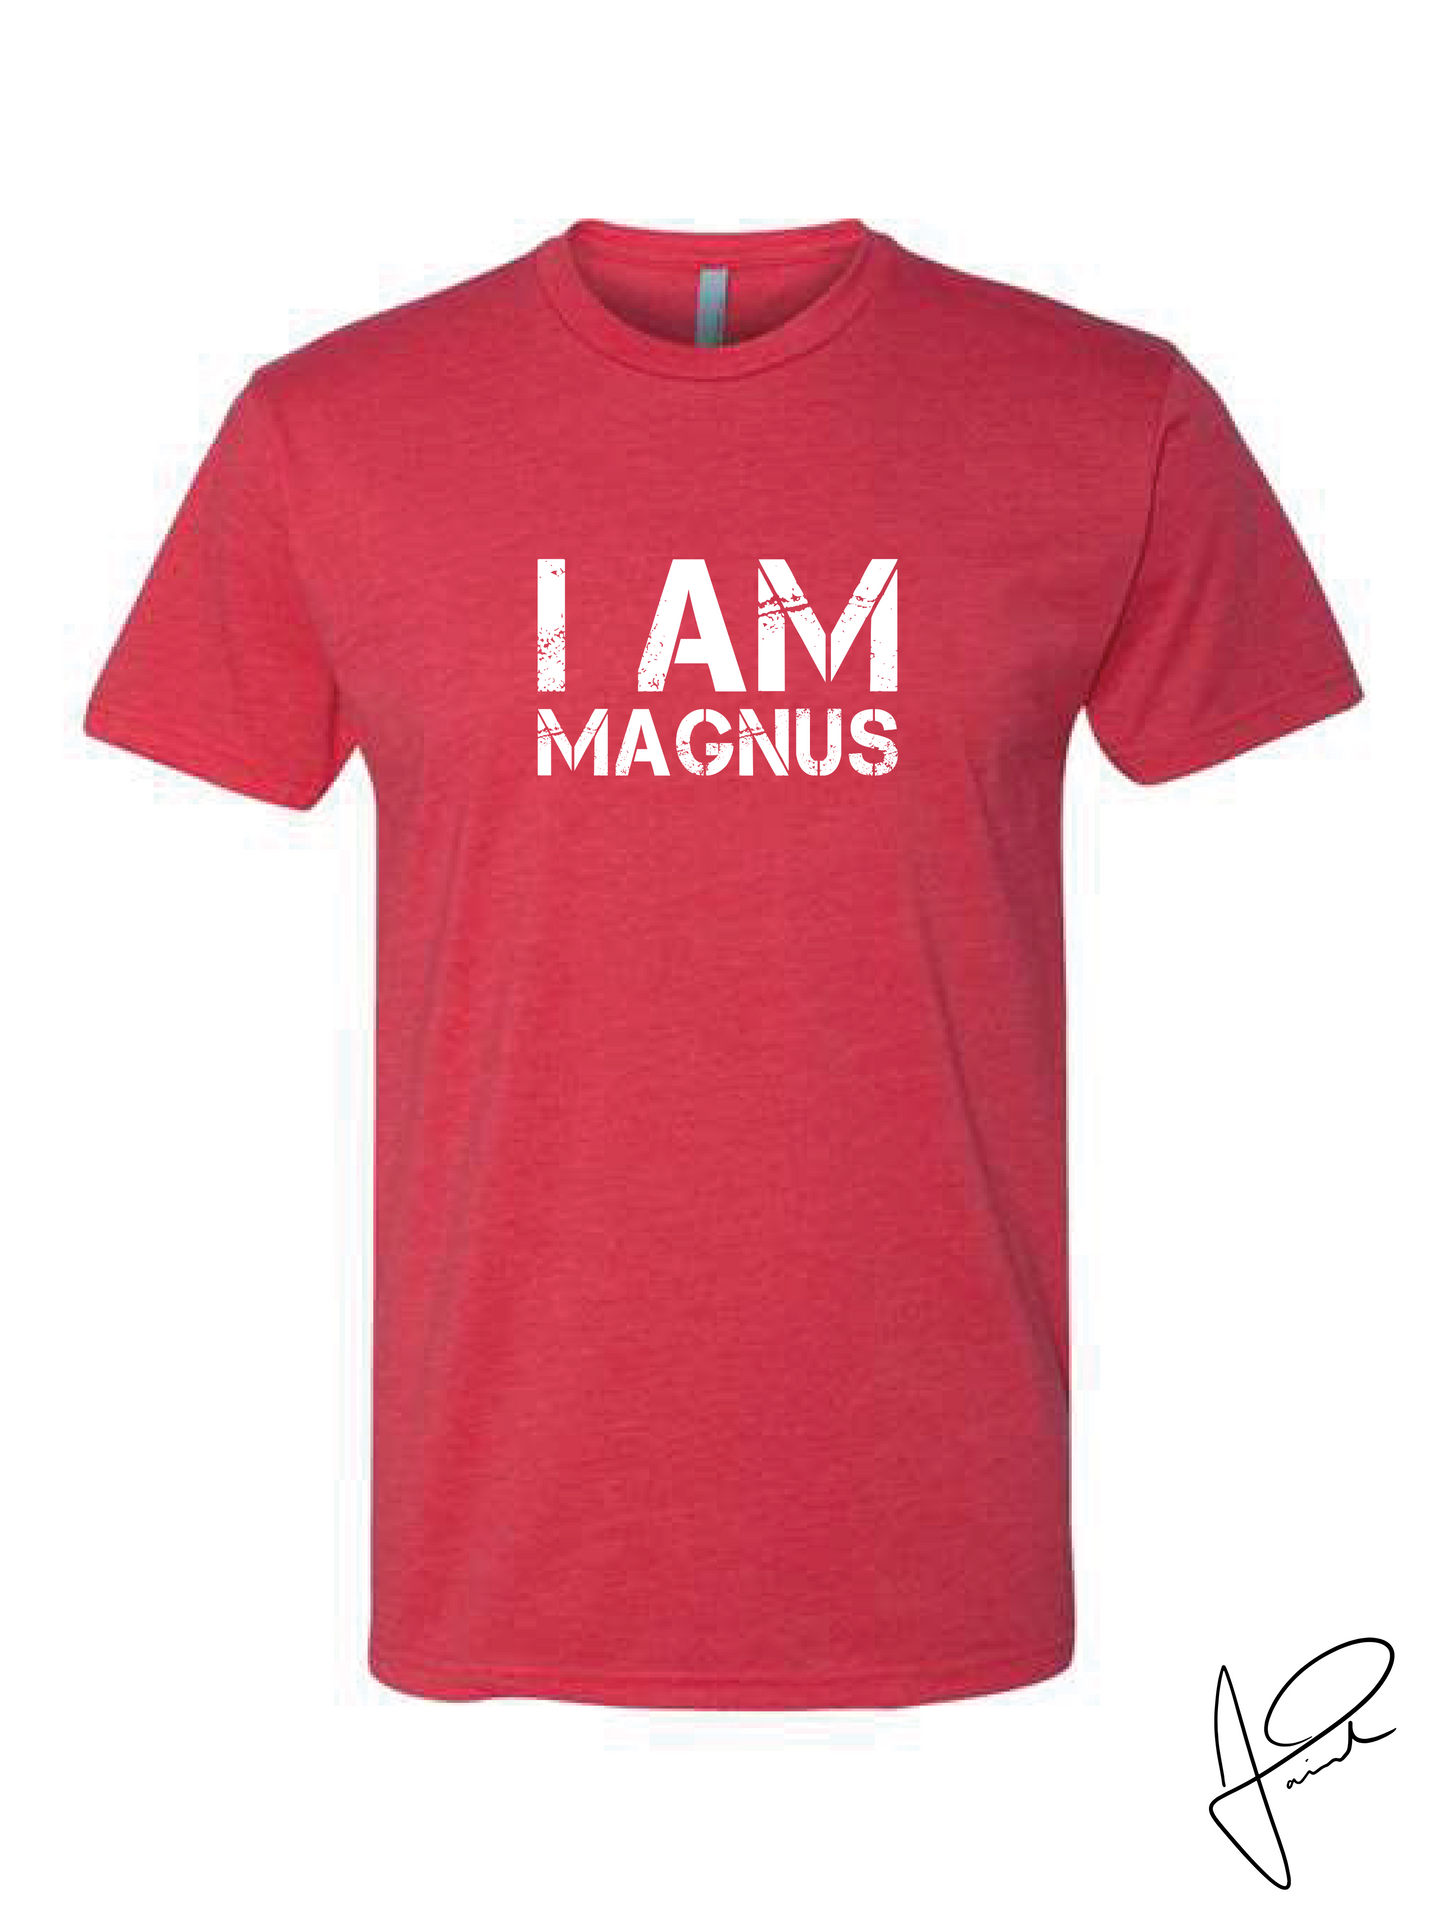 I AM MAGNUS - RED  Shirt